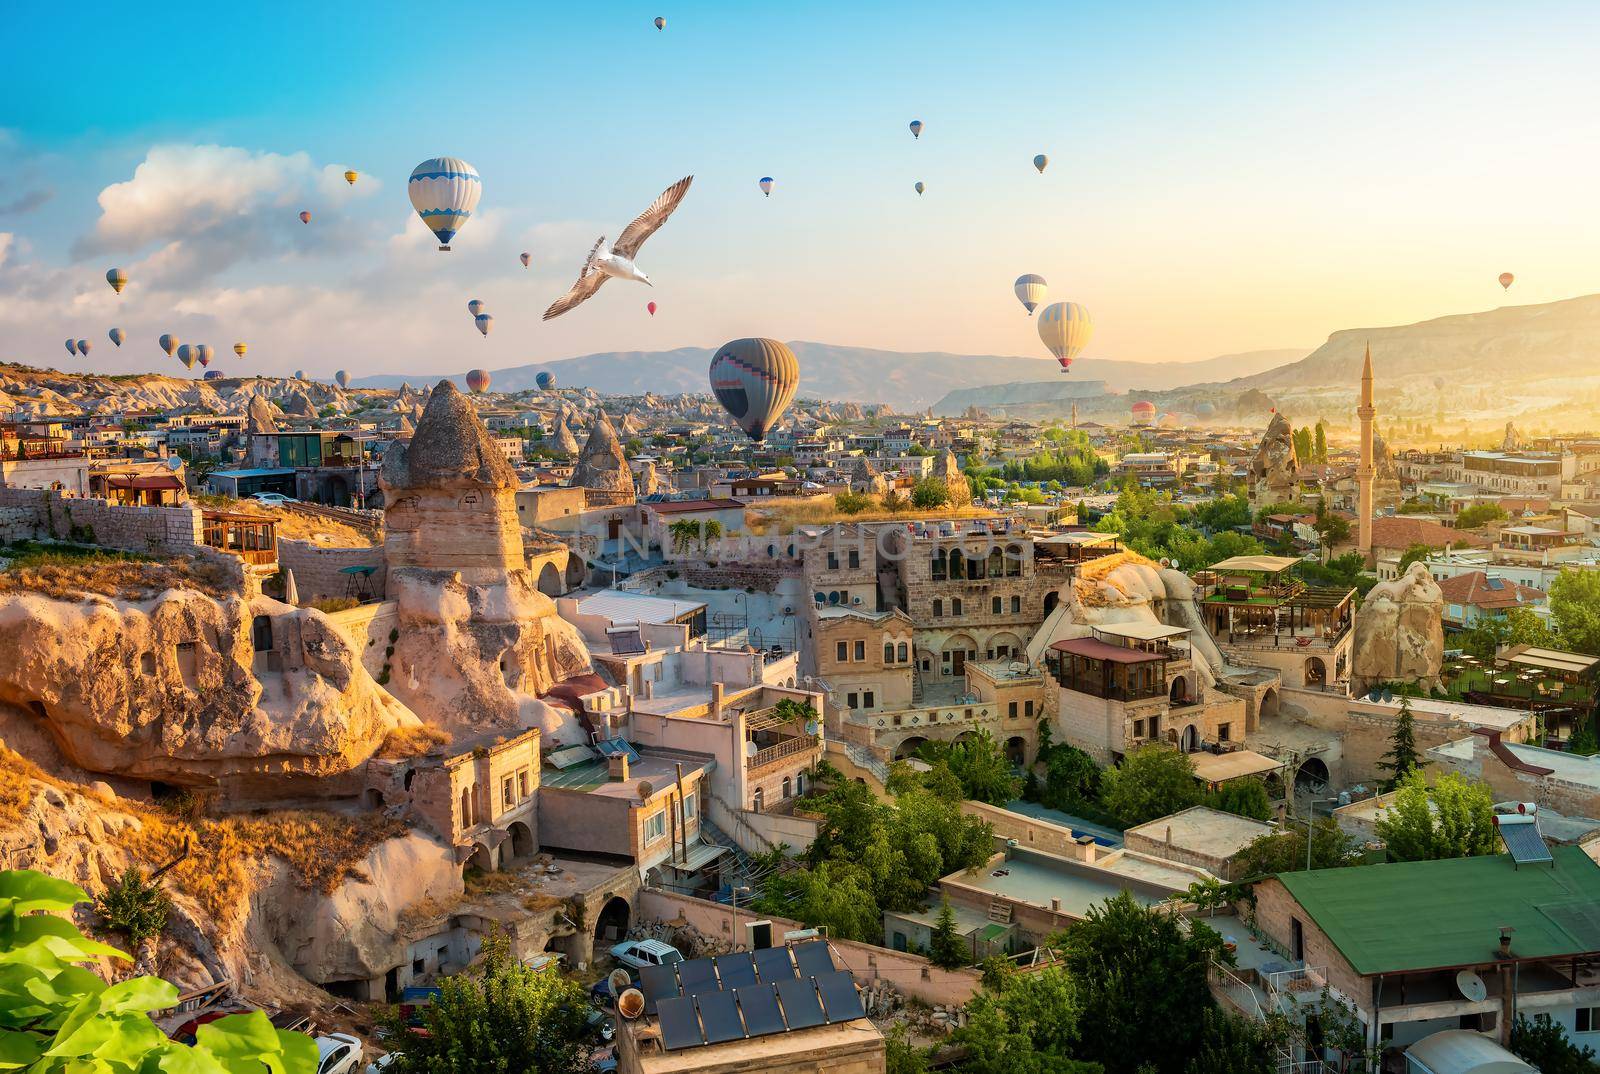 Hot air balloons at sunset in Goreme town, Cappadocia, Turkey